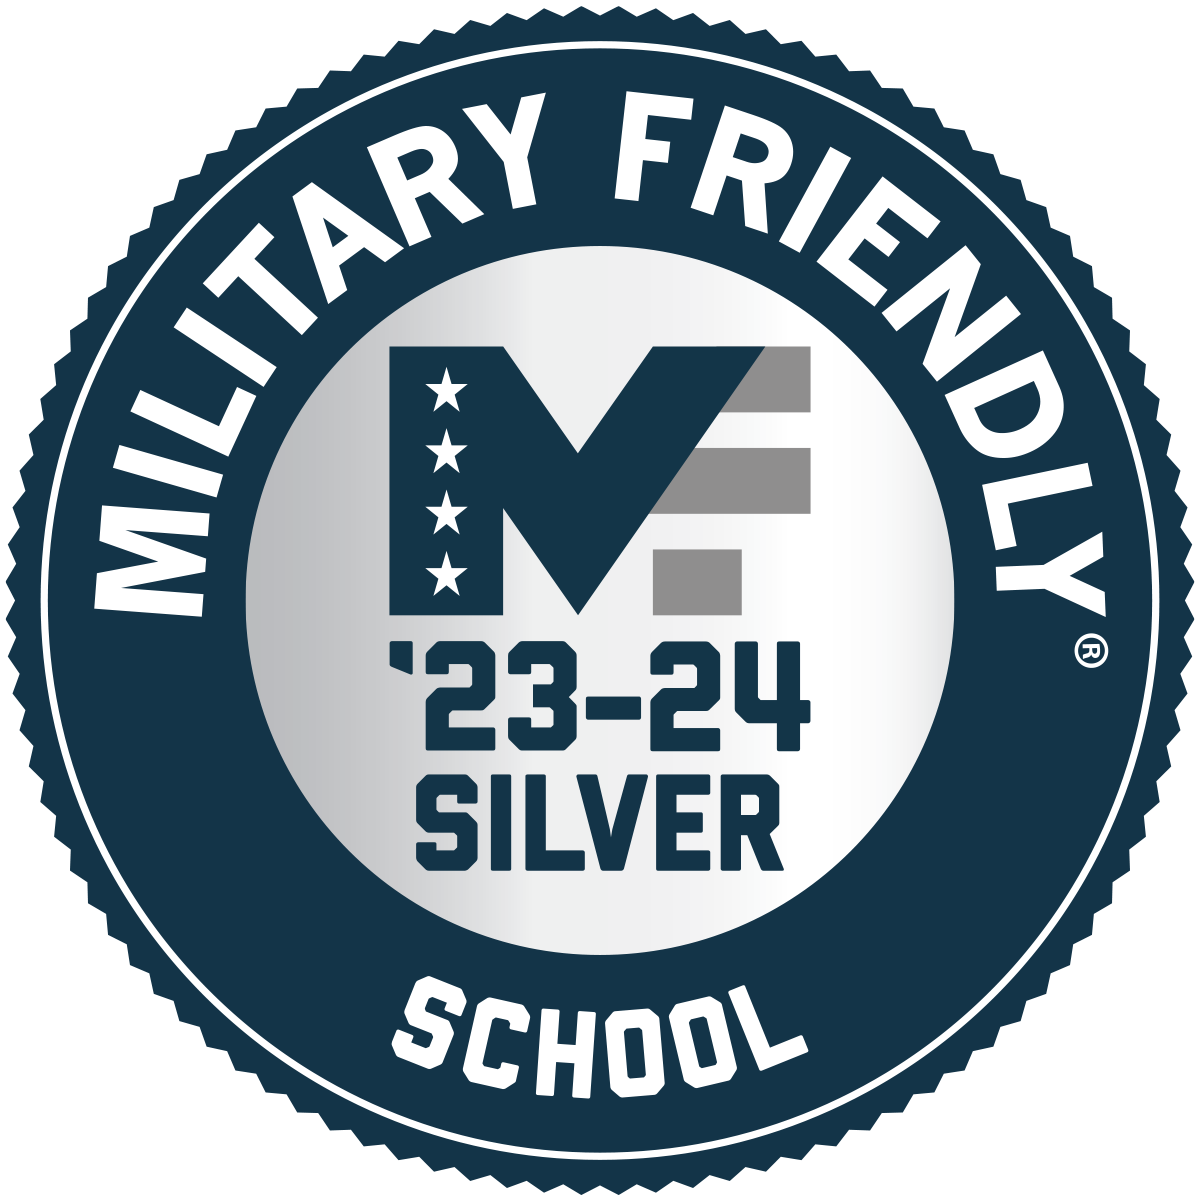 Military friendly school seal